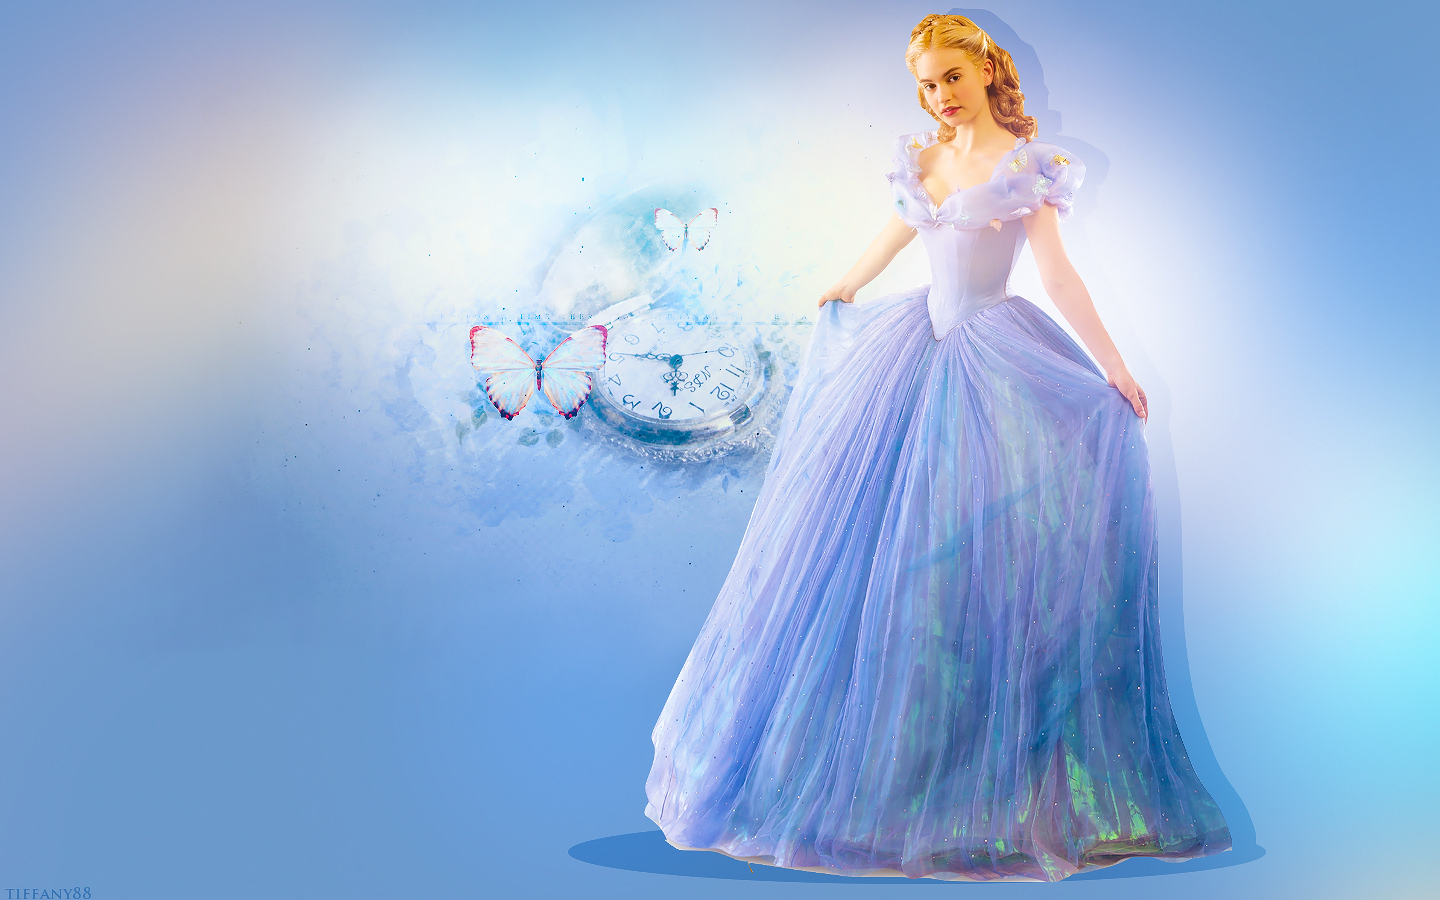 Cinderella - 2015 - Childhood Animated Movie Heroines Wallpaper (39791305)  - Fanpop